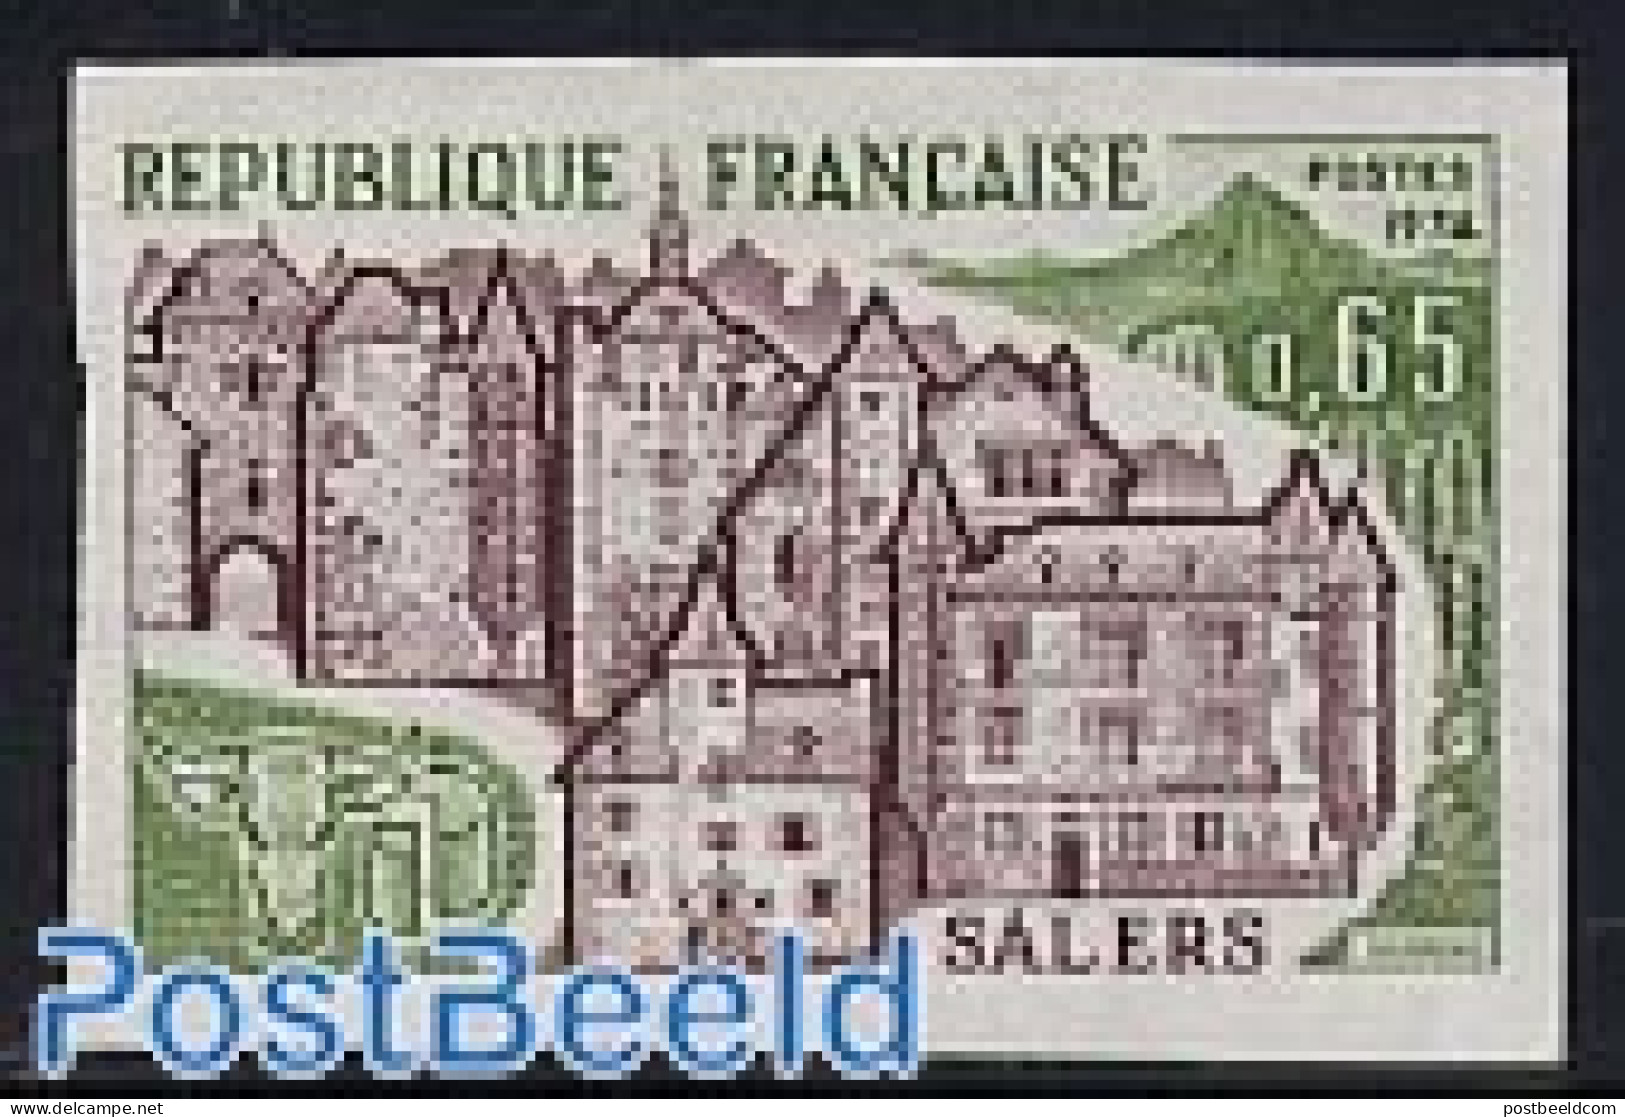 France 1974 Salers 1v Imperforated, Mint NH - Unused Stamps